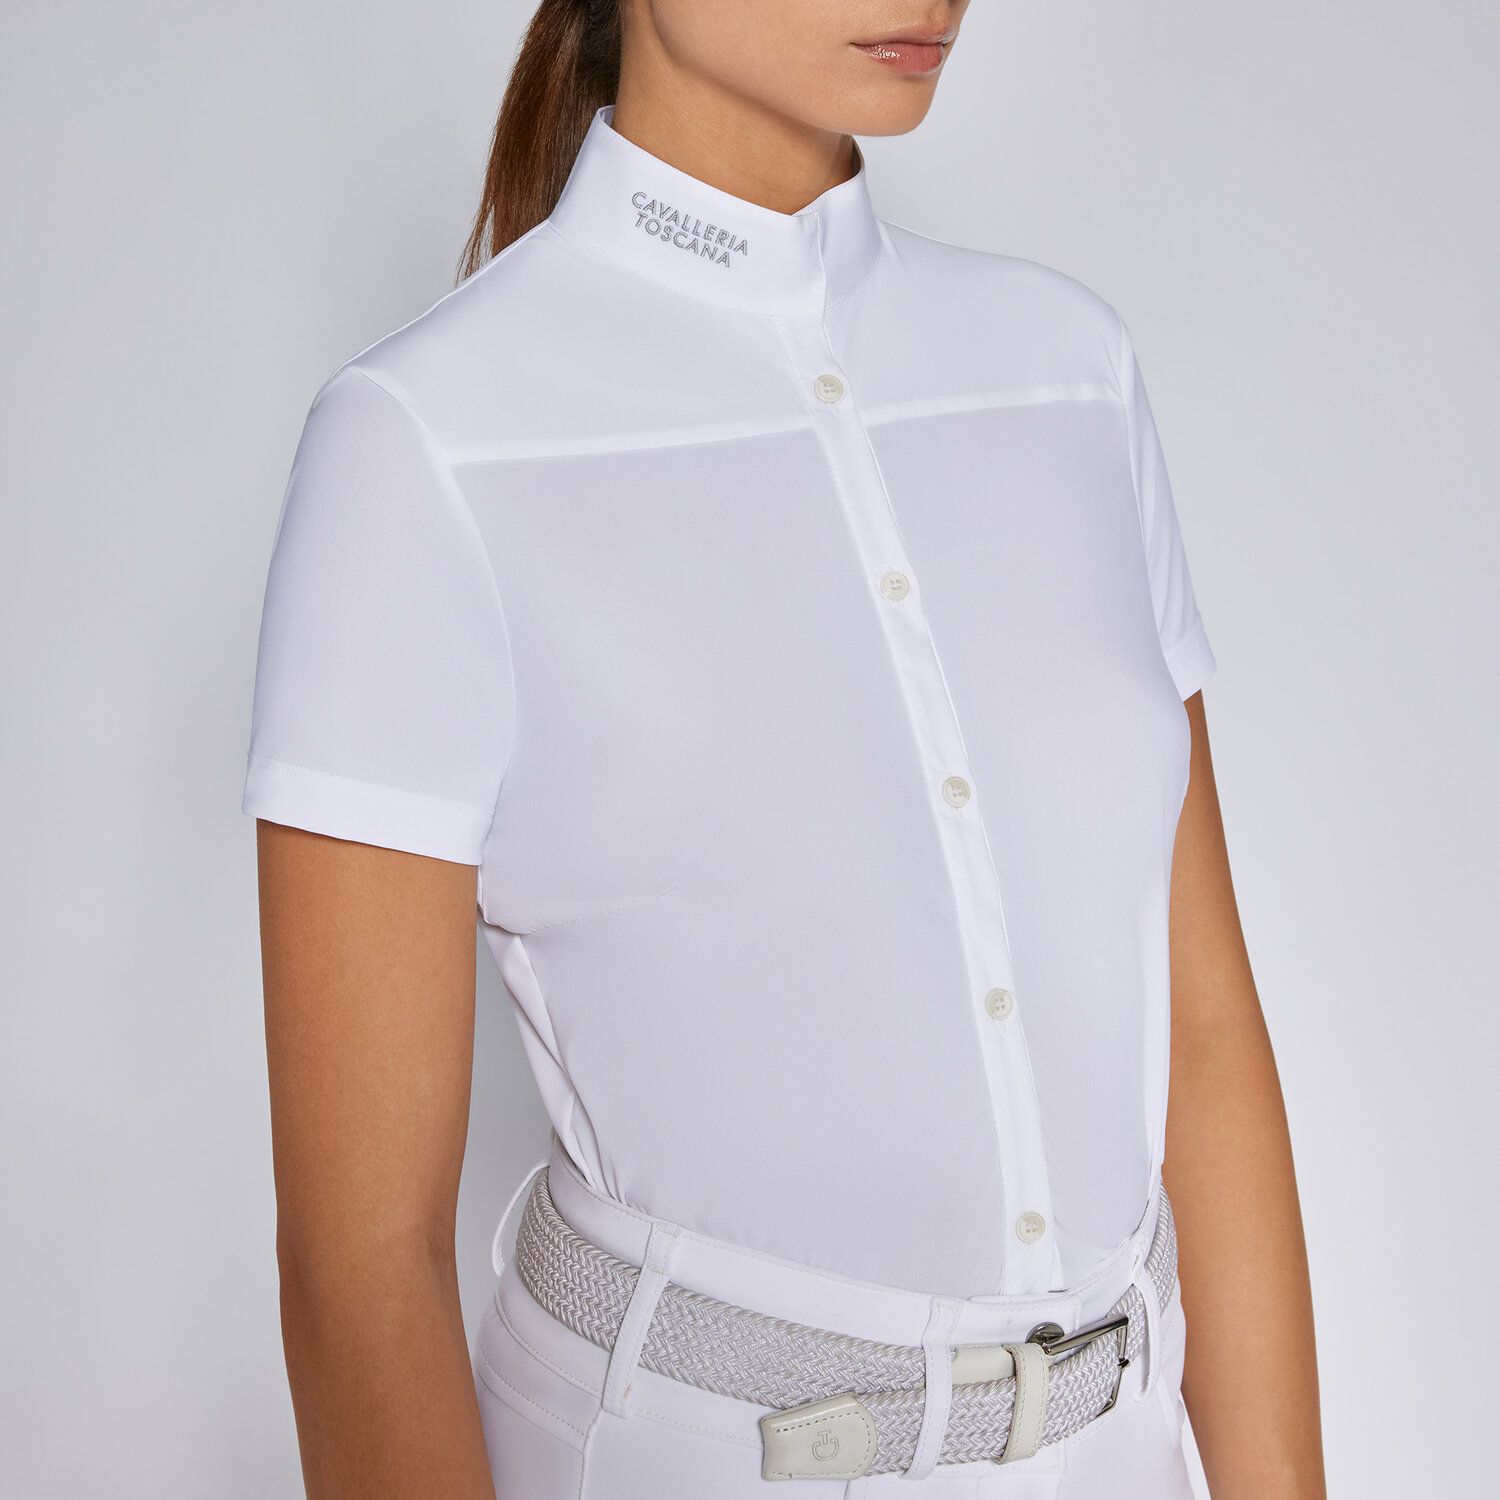 Cavalleria Toscana Women's competition shirt WHITE-3